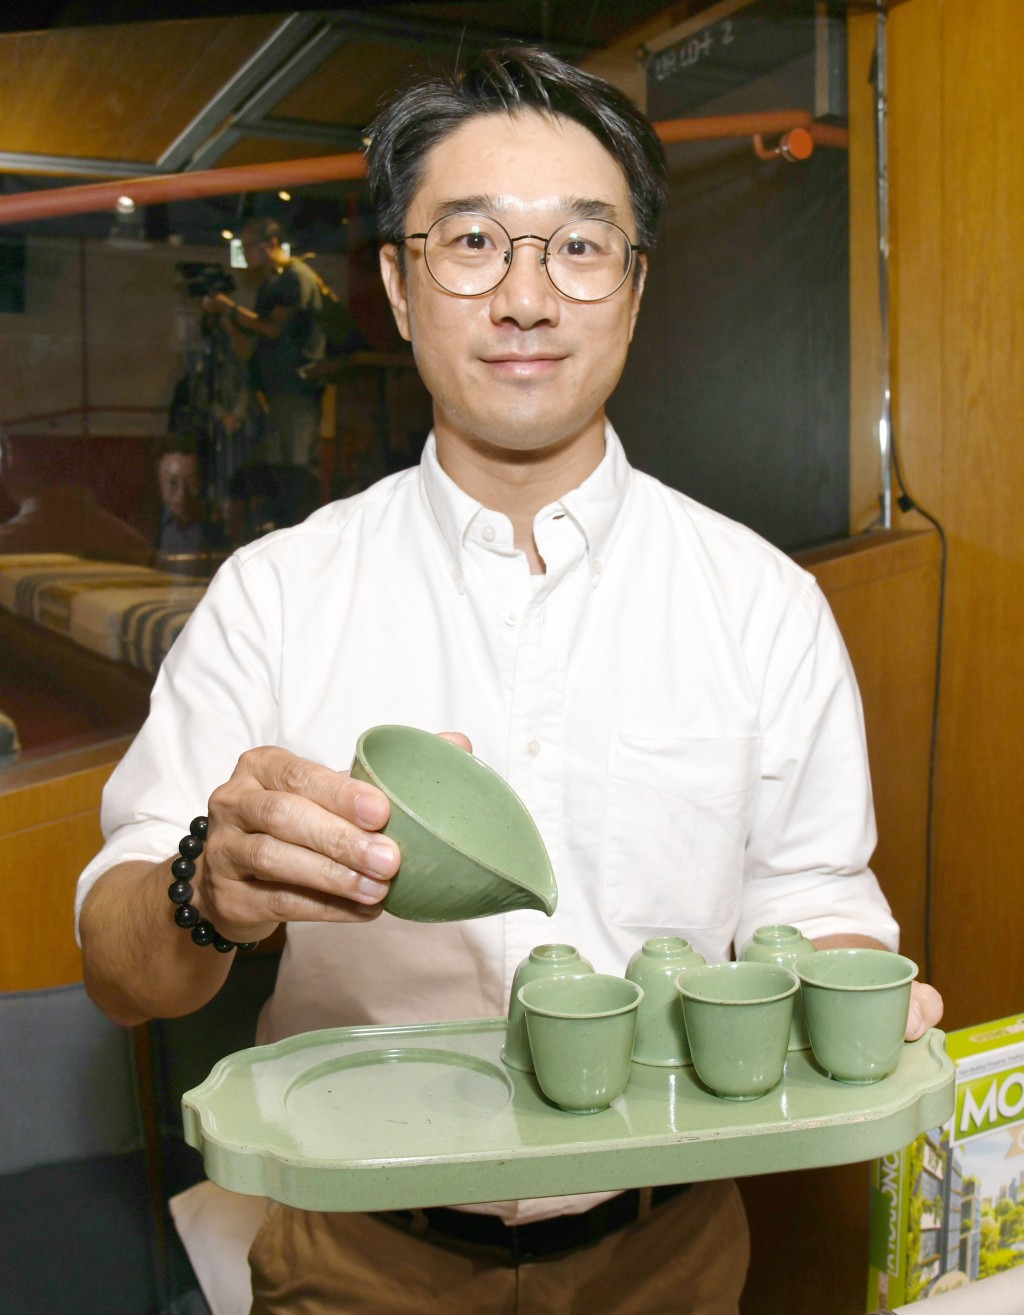 Homelover Products Limited負責人Jimmy手持的茶杯是利用天然稻穀和茶葉桿處理製成。